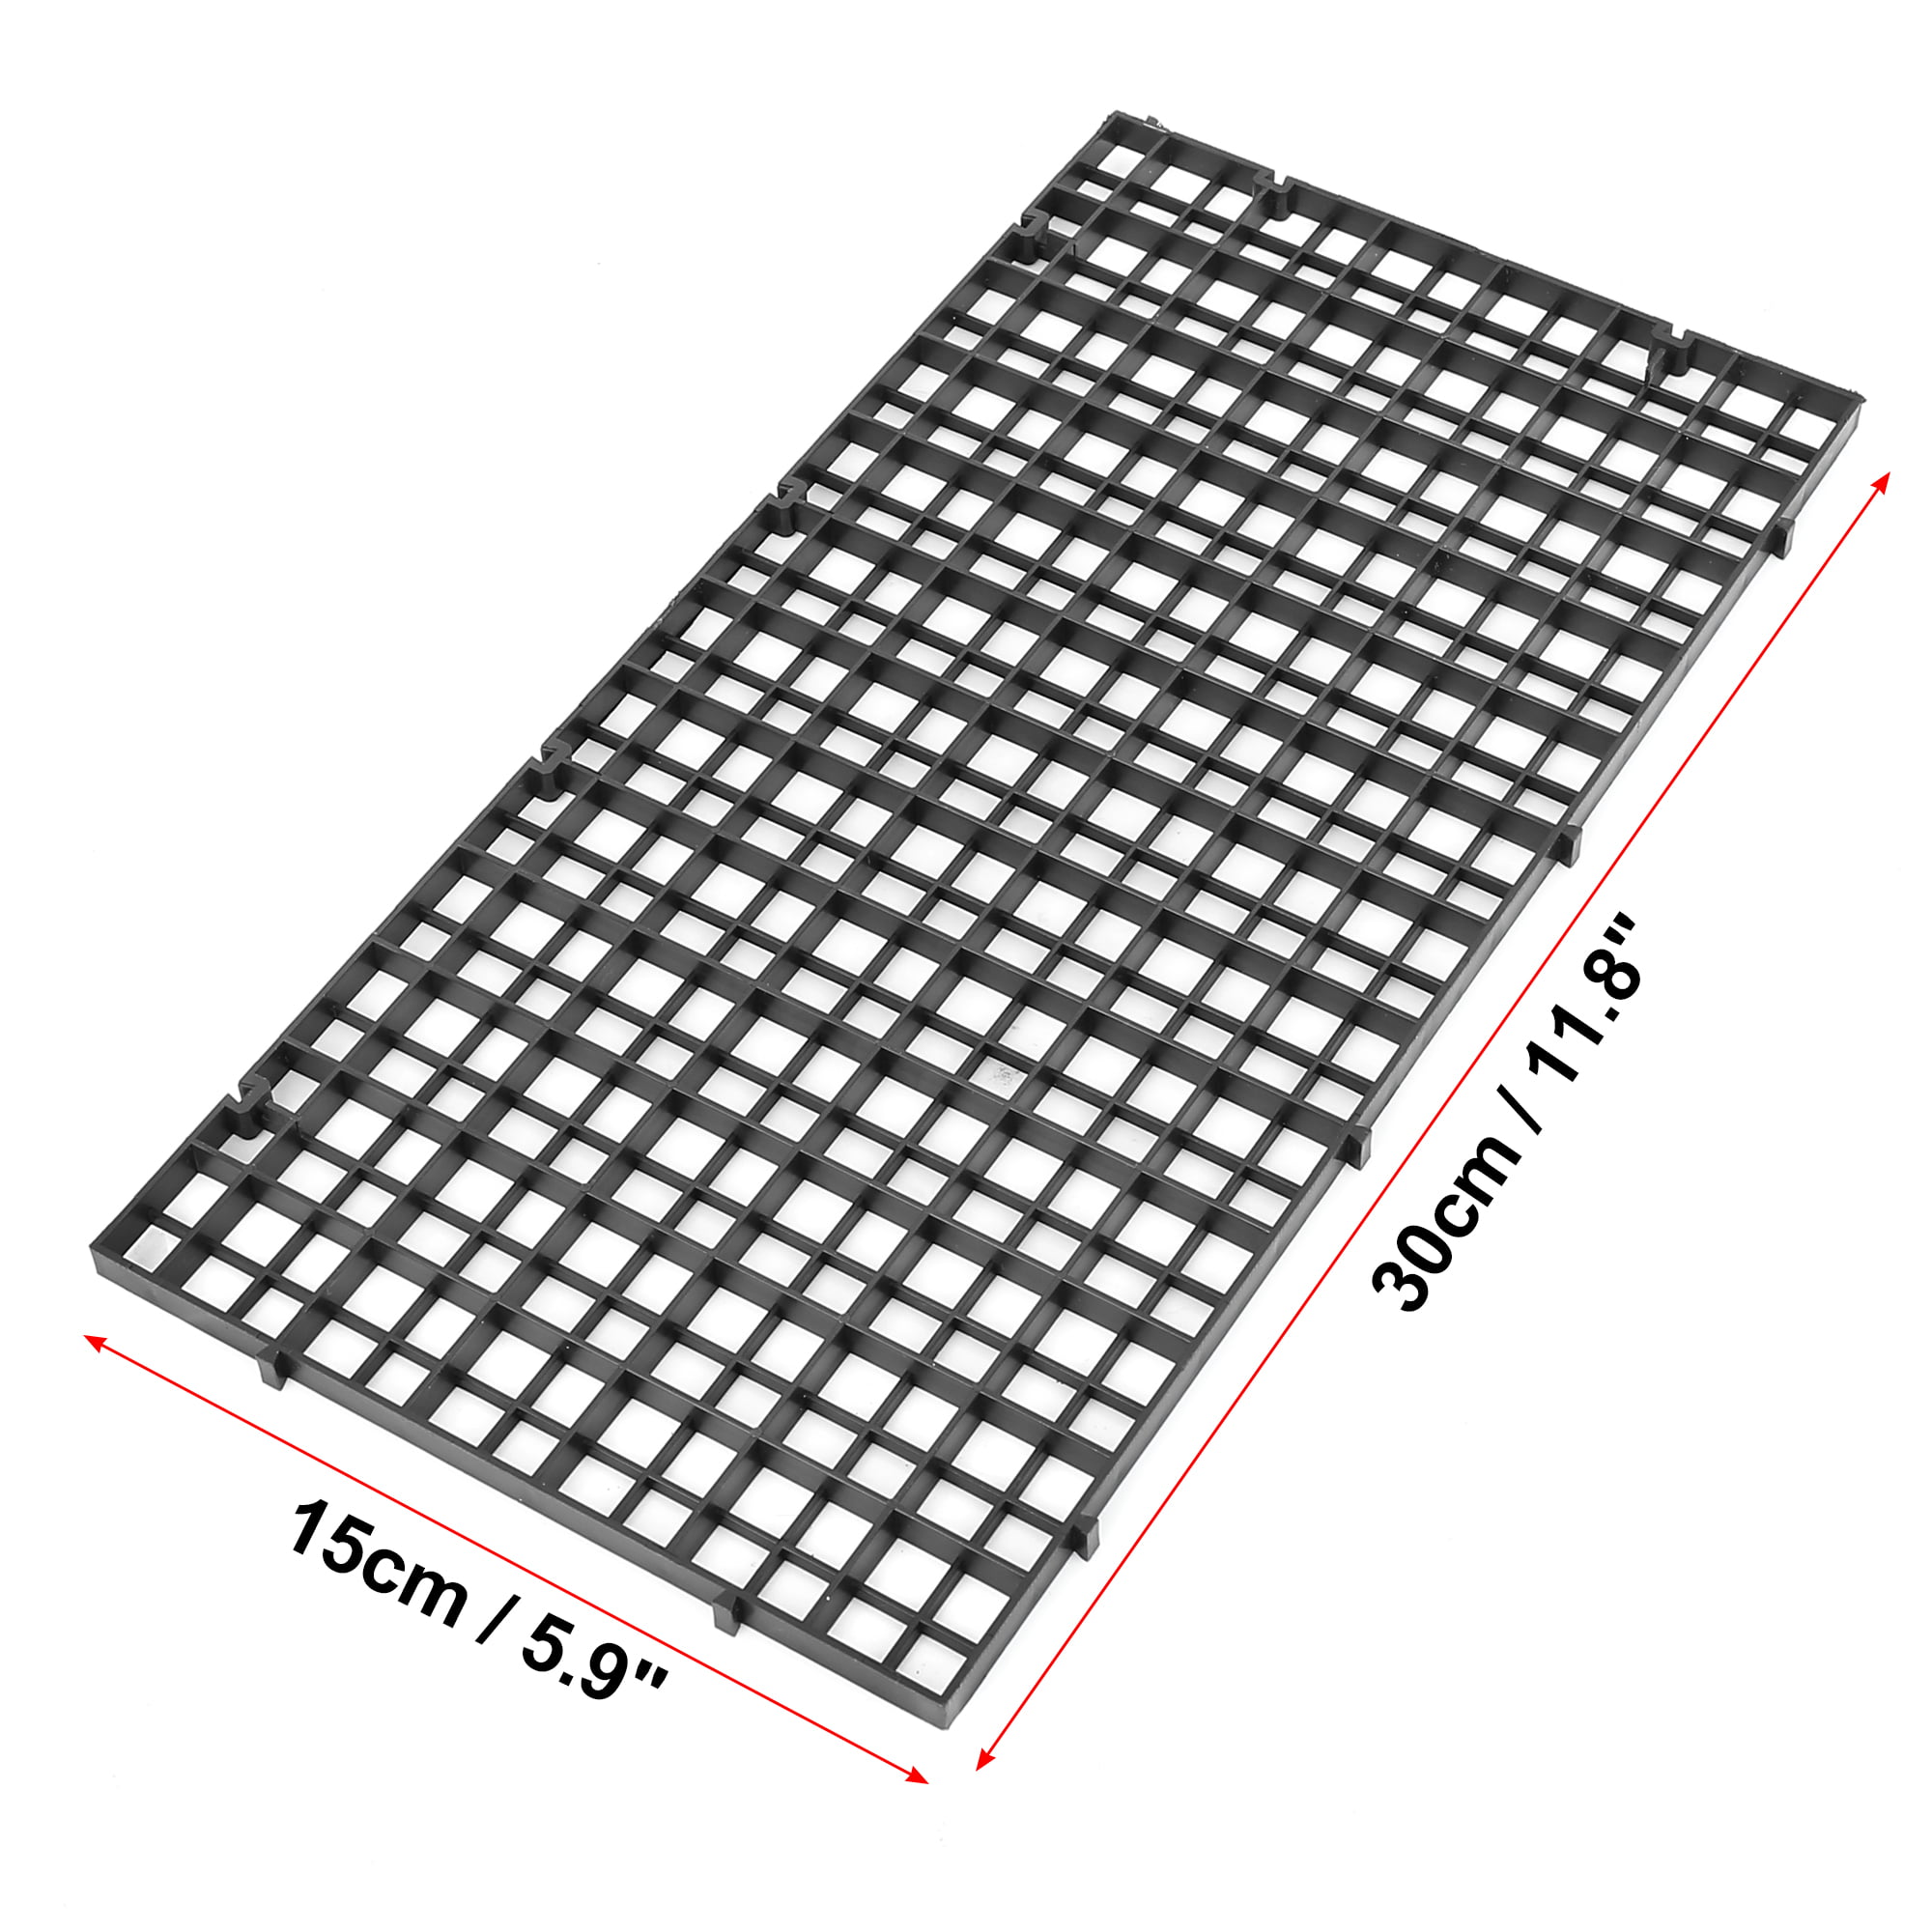 1x 11.6"x5.8" aquarium grid divider freedom assembly isolate filter bottom black 